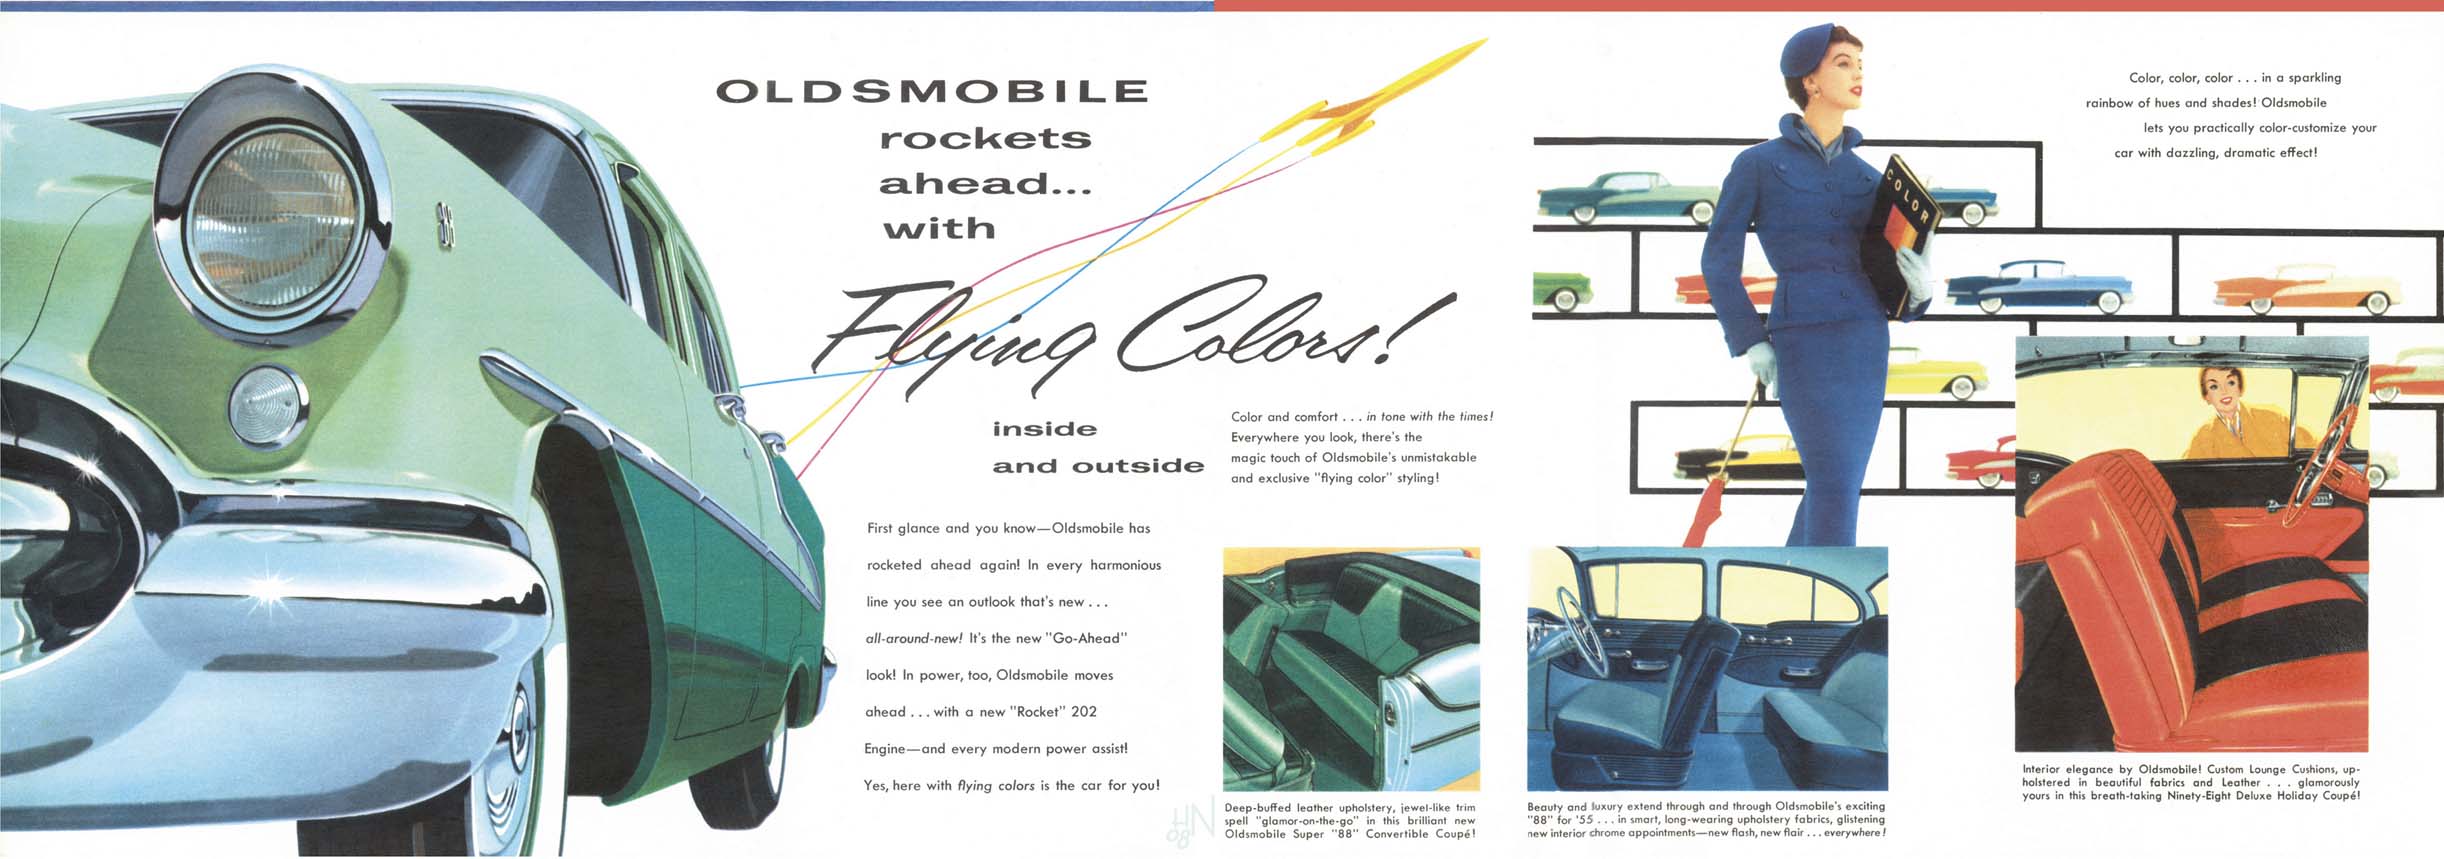 1955 Oldsmobile Foldout-01